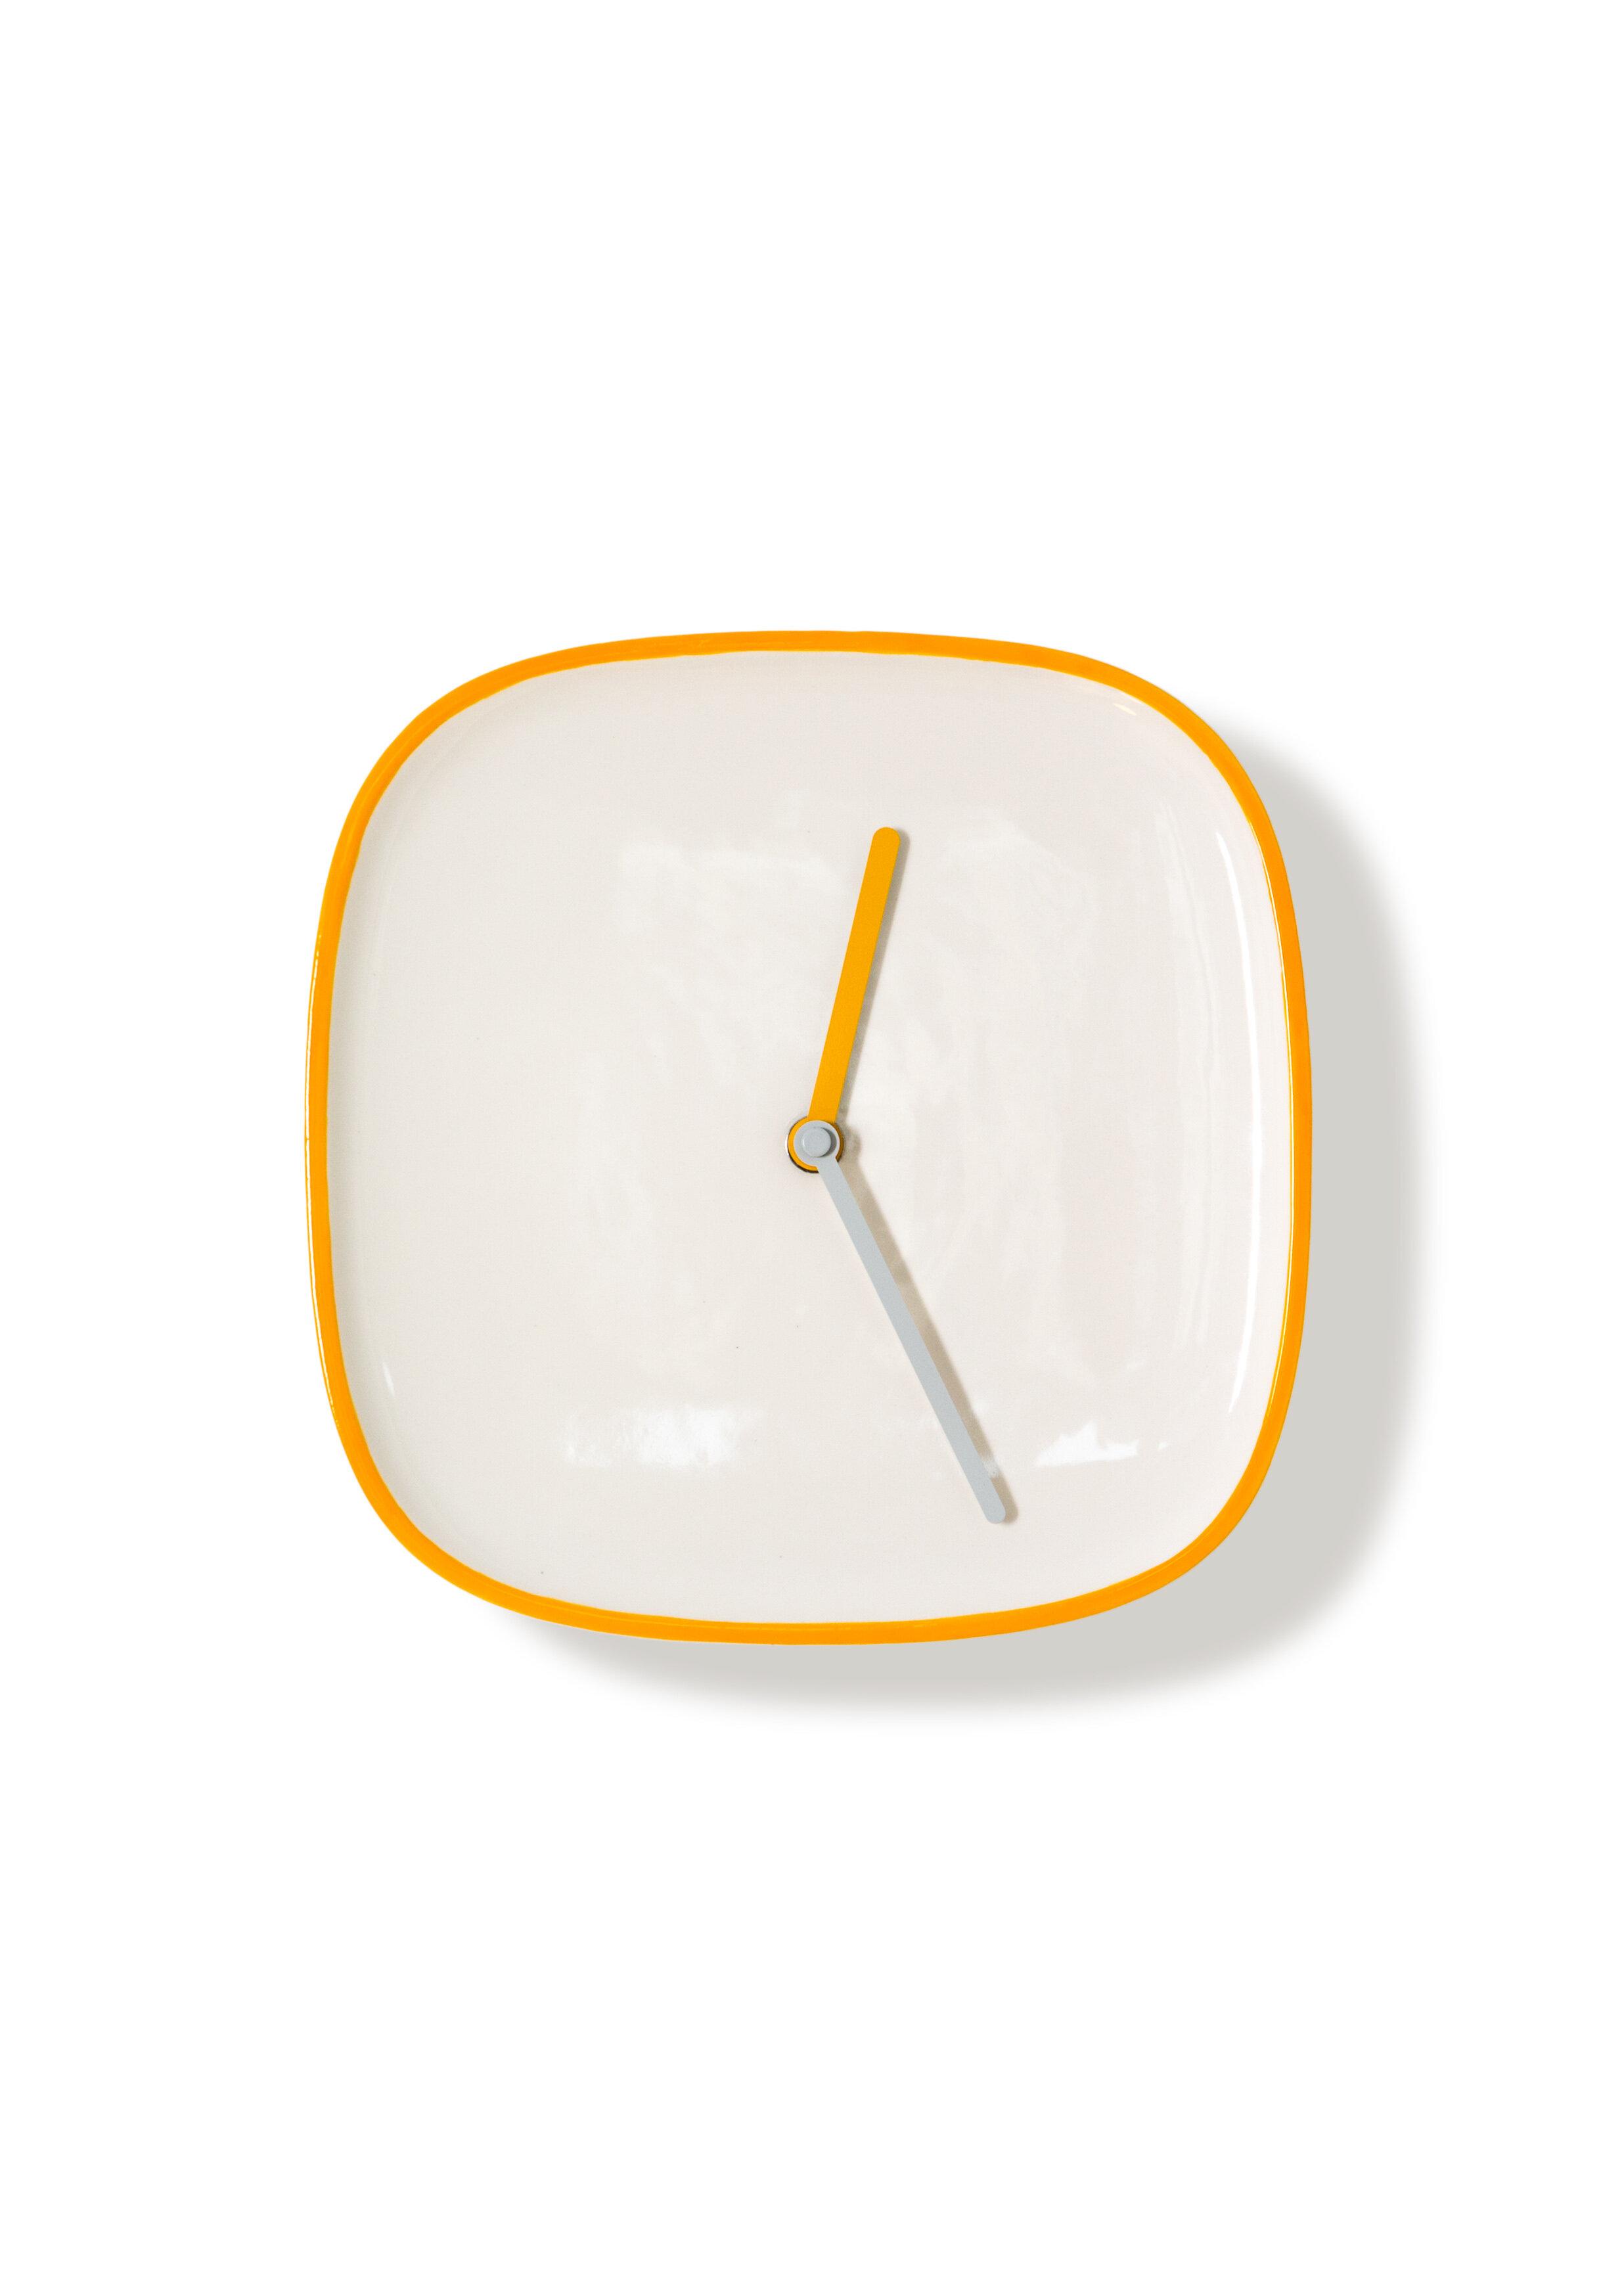 teo-plate-wall-clock-orange-cutout.jpg